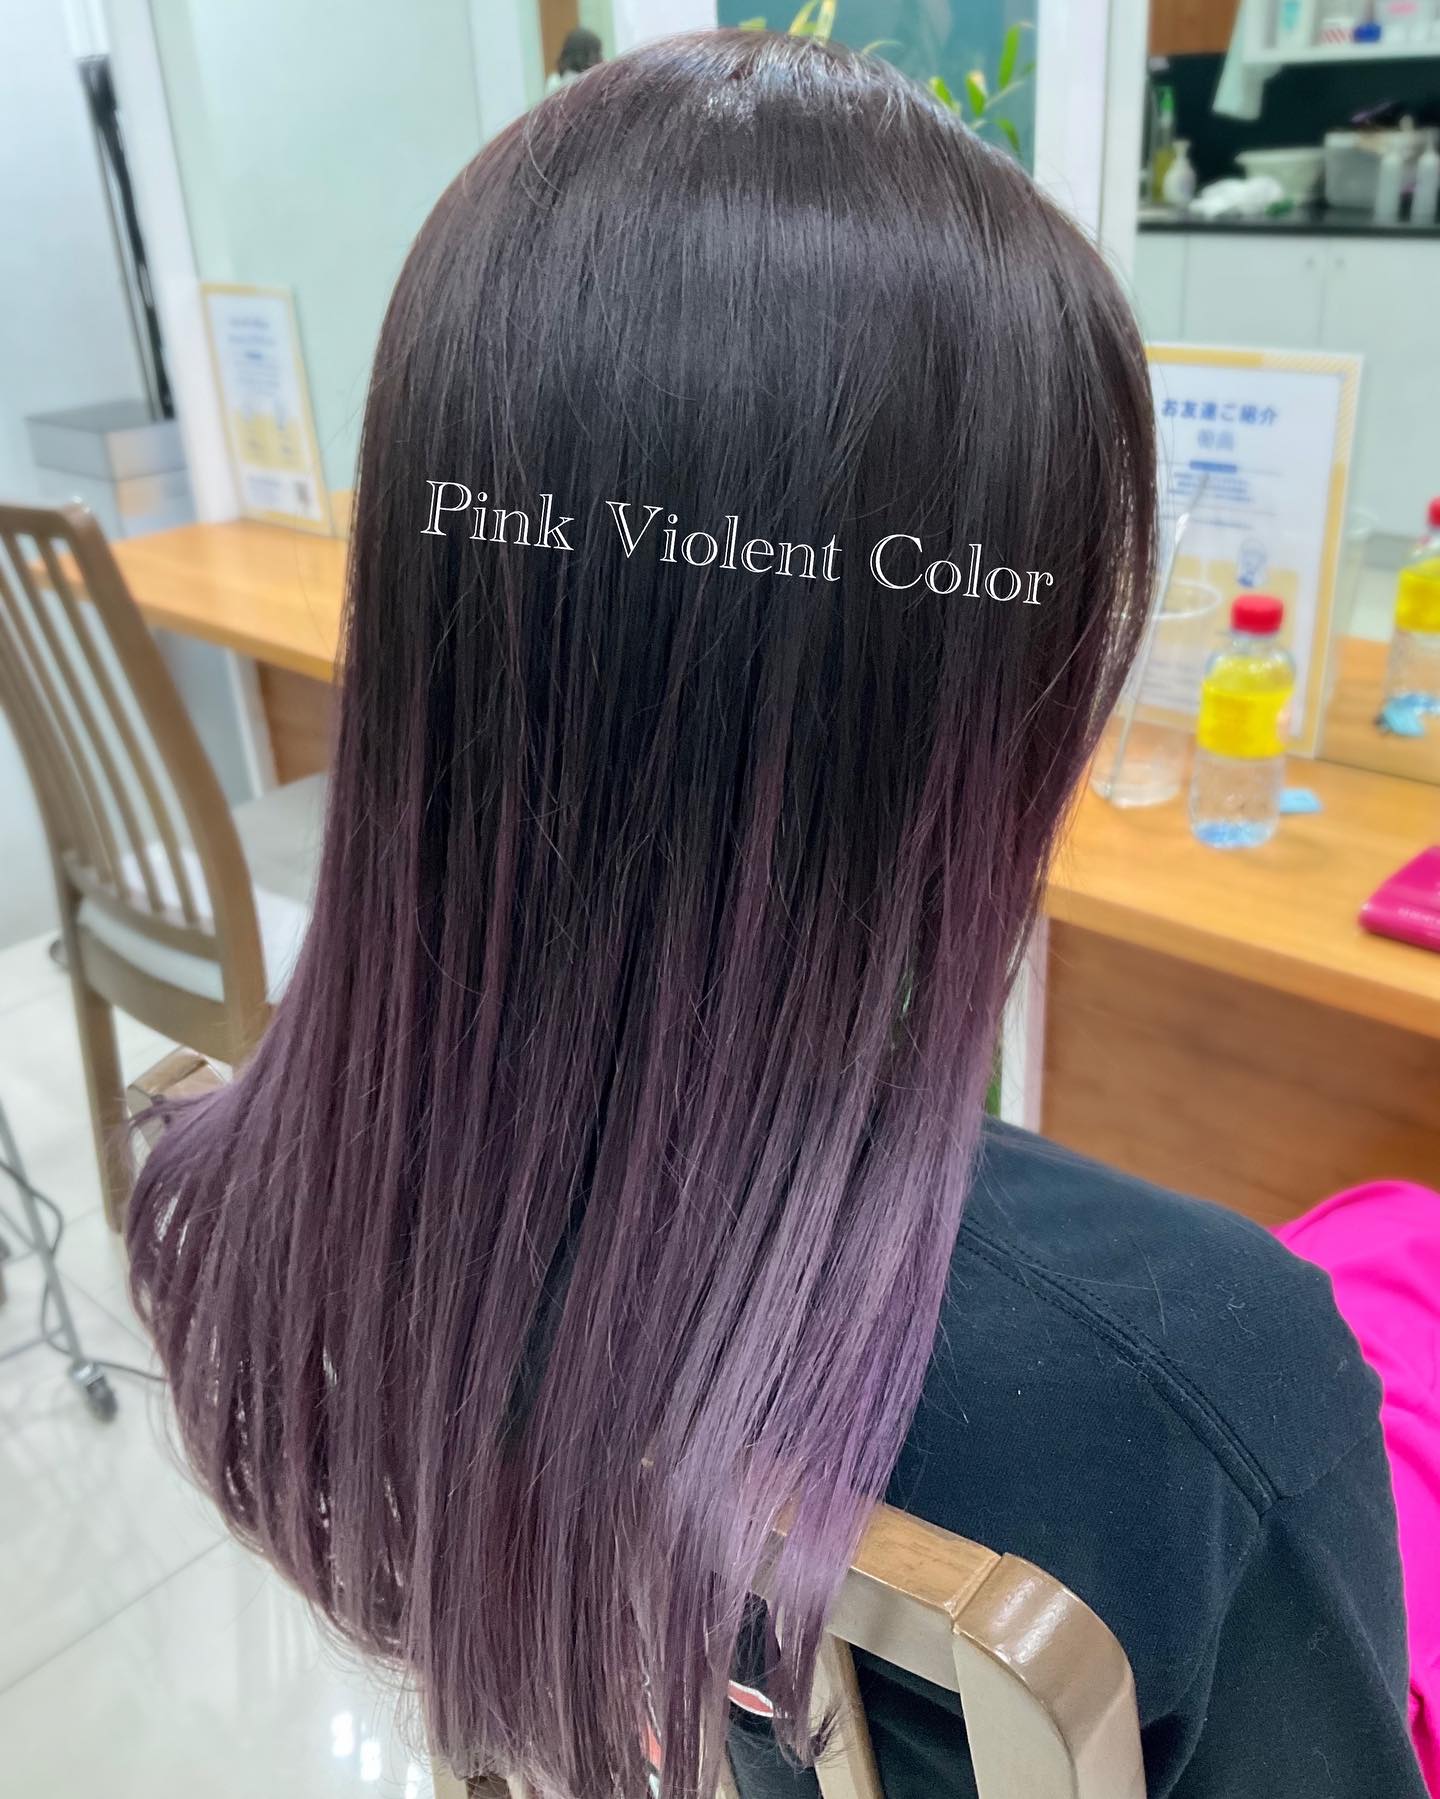 Pink Violet Color  Cut + Color + Treatment
 4700B → 3525B+  Promotion25%OFF️
…………………………
ร้าน Hair Room Sora 299/7 ชั้น1, Sukhumvit Living Town, ซอยสุขุมวิท21(อโศก)
️ 02-169-1622
 Line : @575zzlqc (มี @)
️** บัตรเครดิตขั้นต่ำ 2000 บาท **
#Hairroomsora #Hairroomsorabangkok #🤖 #Hairstyle #sukhumvit21 #Japanesesalon #DigitalPerm #バンコク美容院 #ヘアールームソラ #head spa bangkok #fashioncolor #ร้านซาลอนญี่ปุ่น #ซาลอน #ทำผมรับปริญญา #ทำผมออกงาน #รับทำผม #ดัดดิจิตอล #ยืดผม #ย้อมผม #Repost